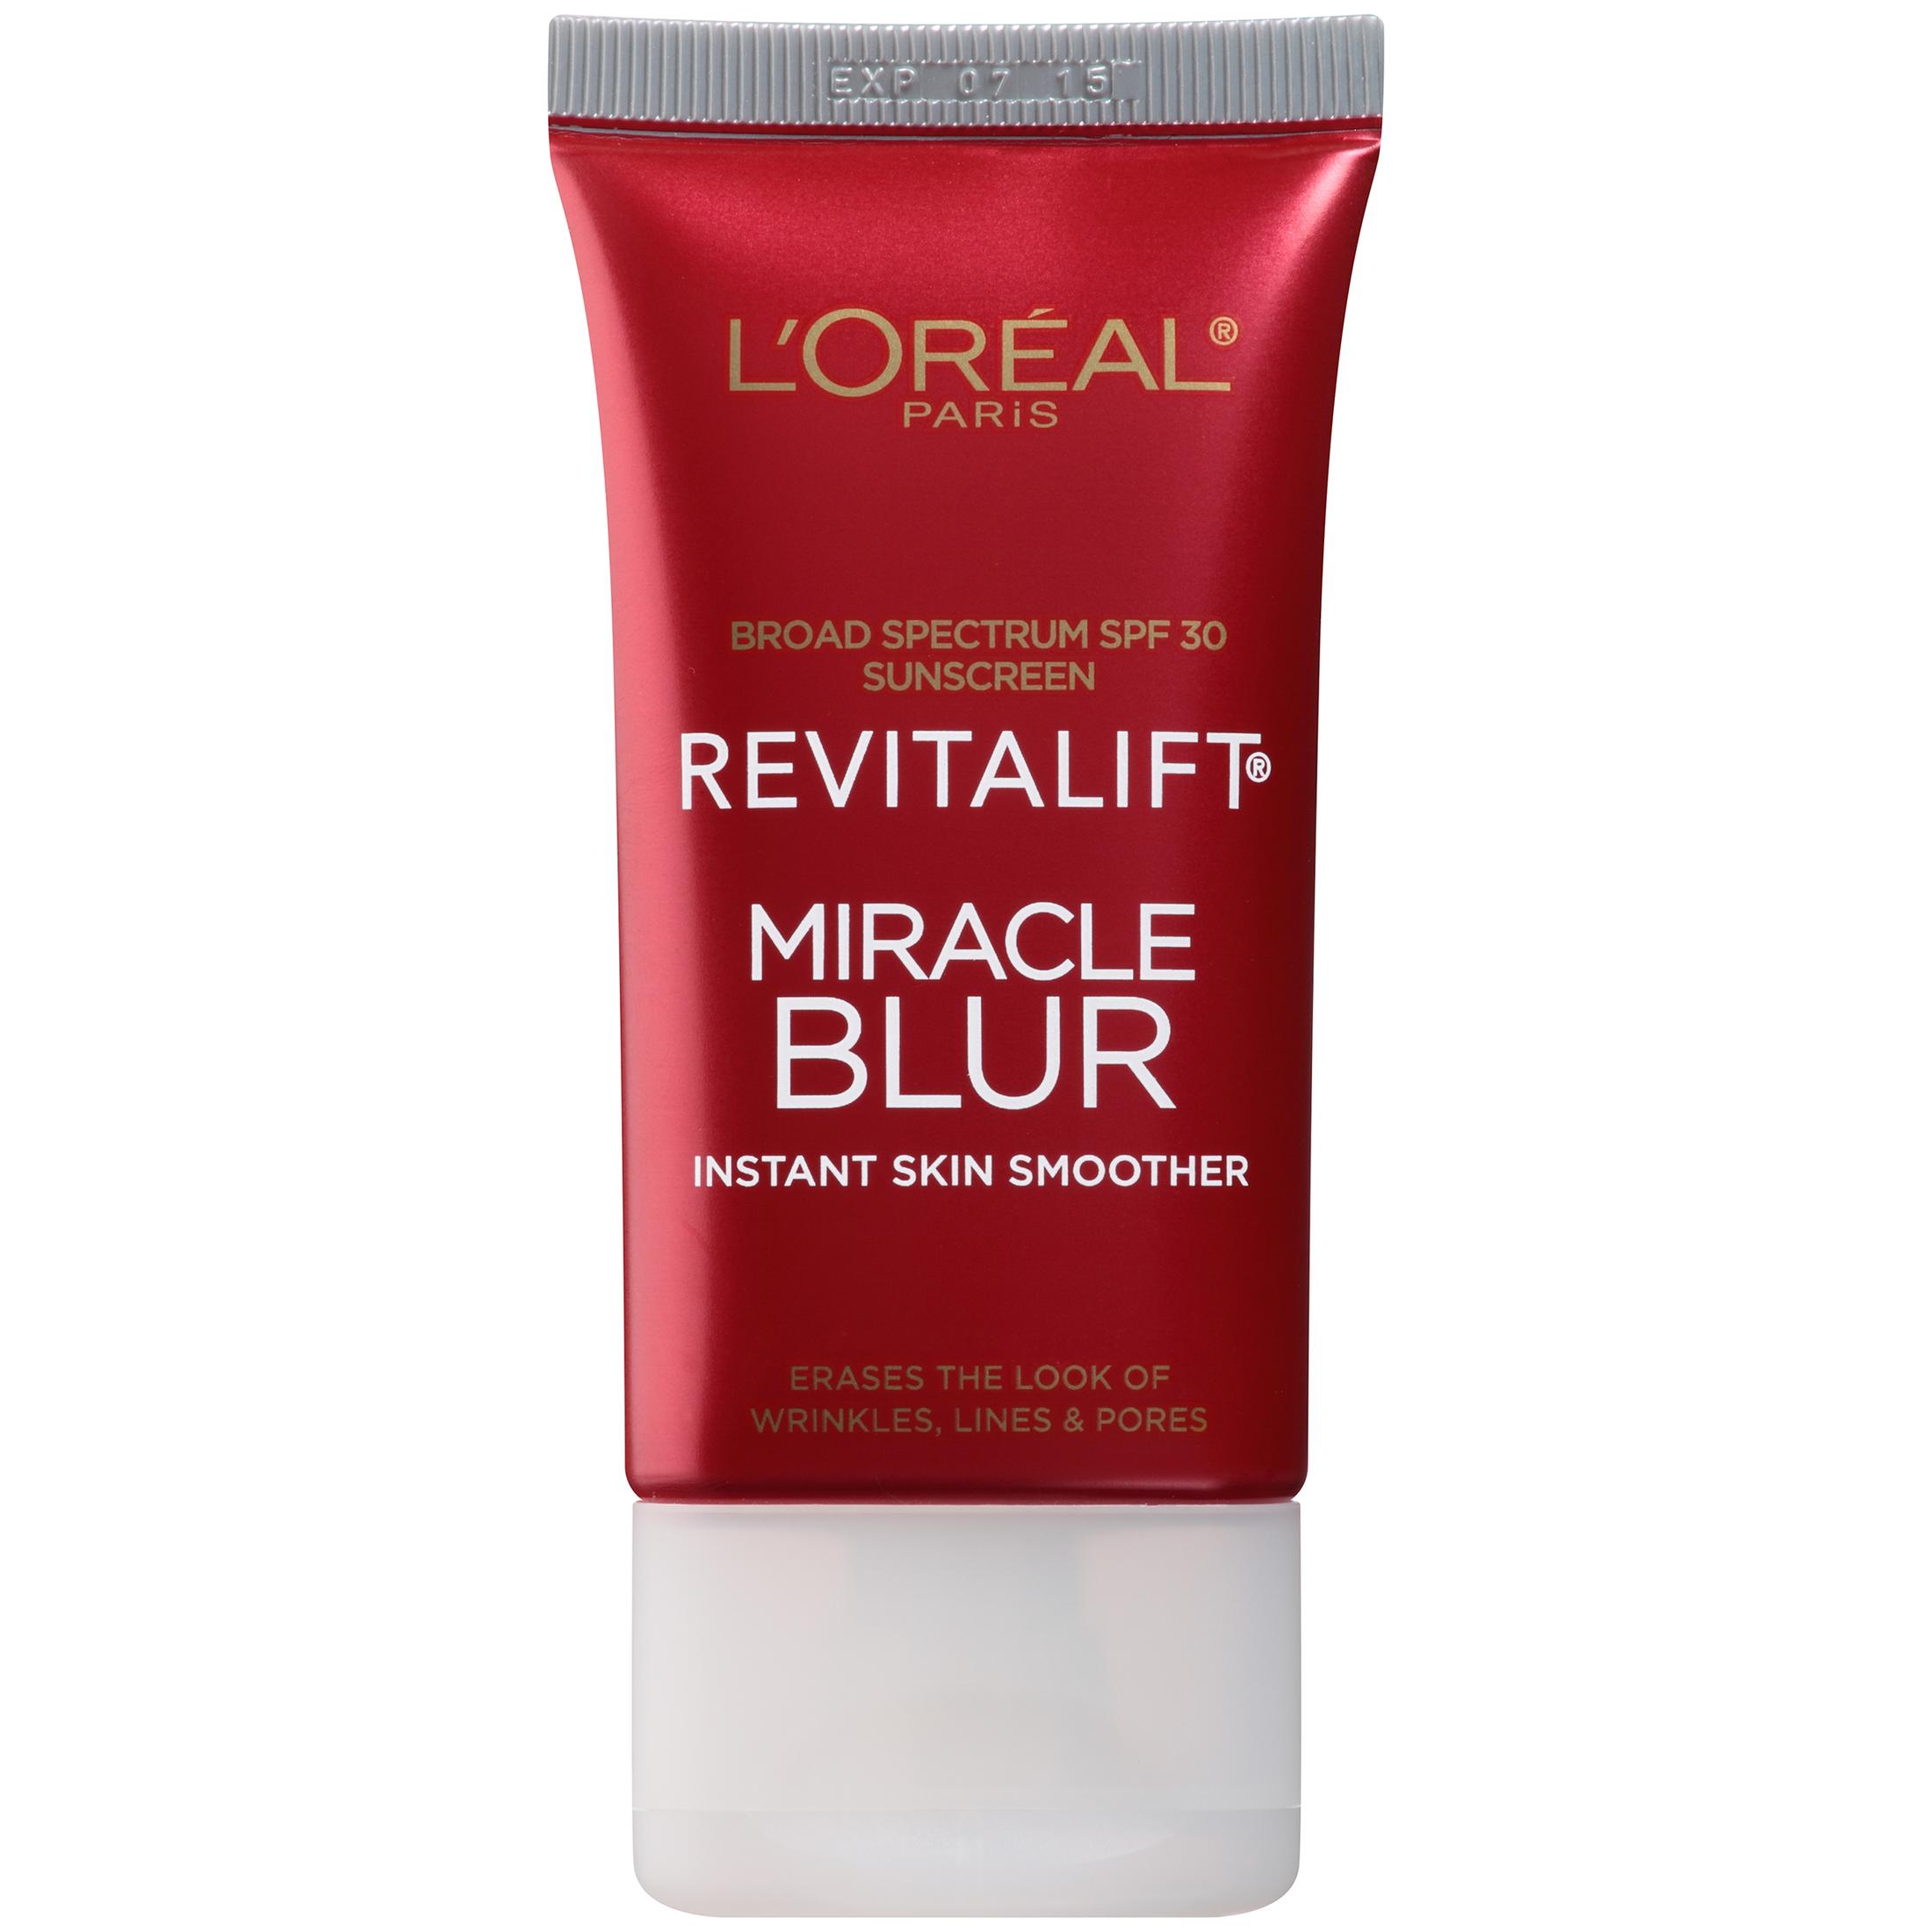 L'Oreal Paris Revitalift Miracle Blur Broad Spectrum SPF 30 Sunscreen 1.18 fl oz - image 3 of 6